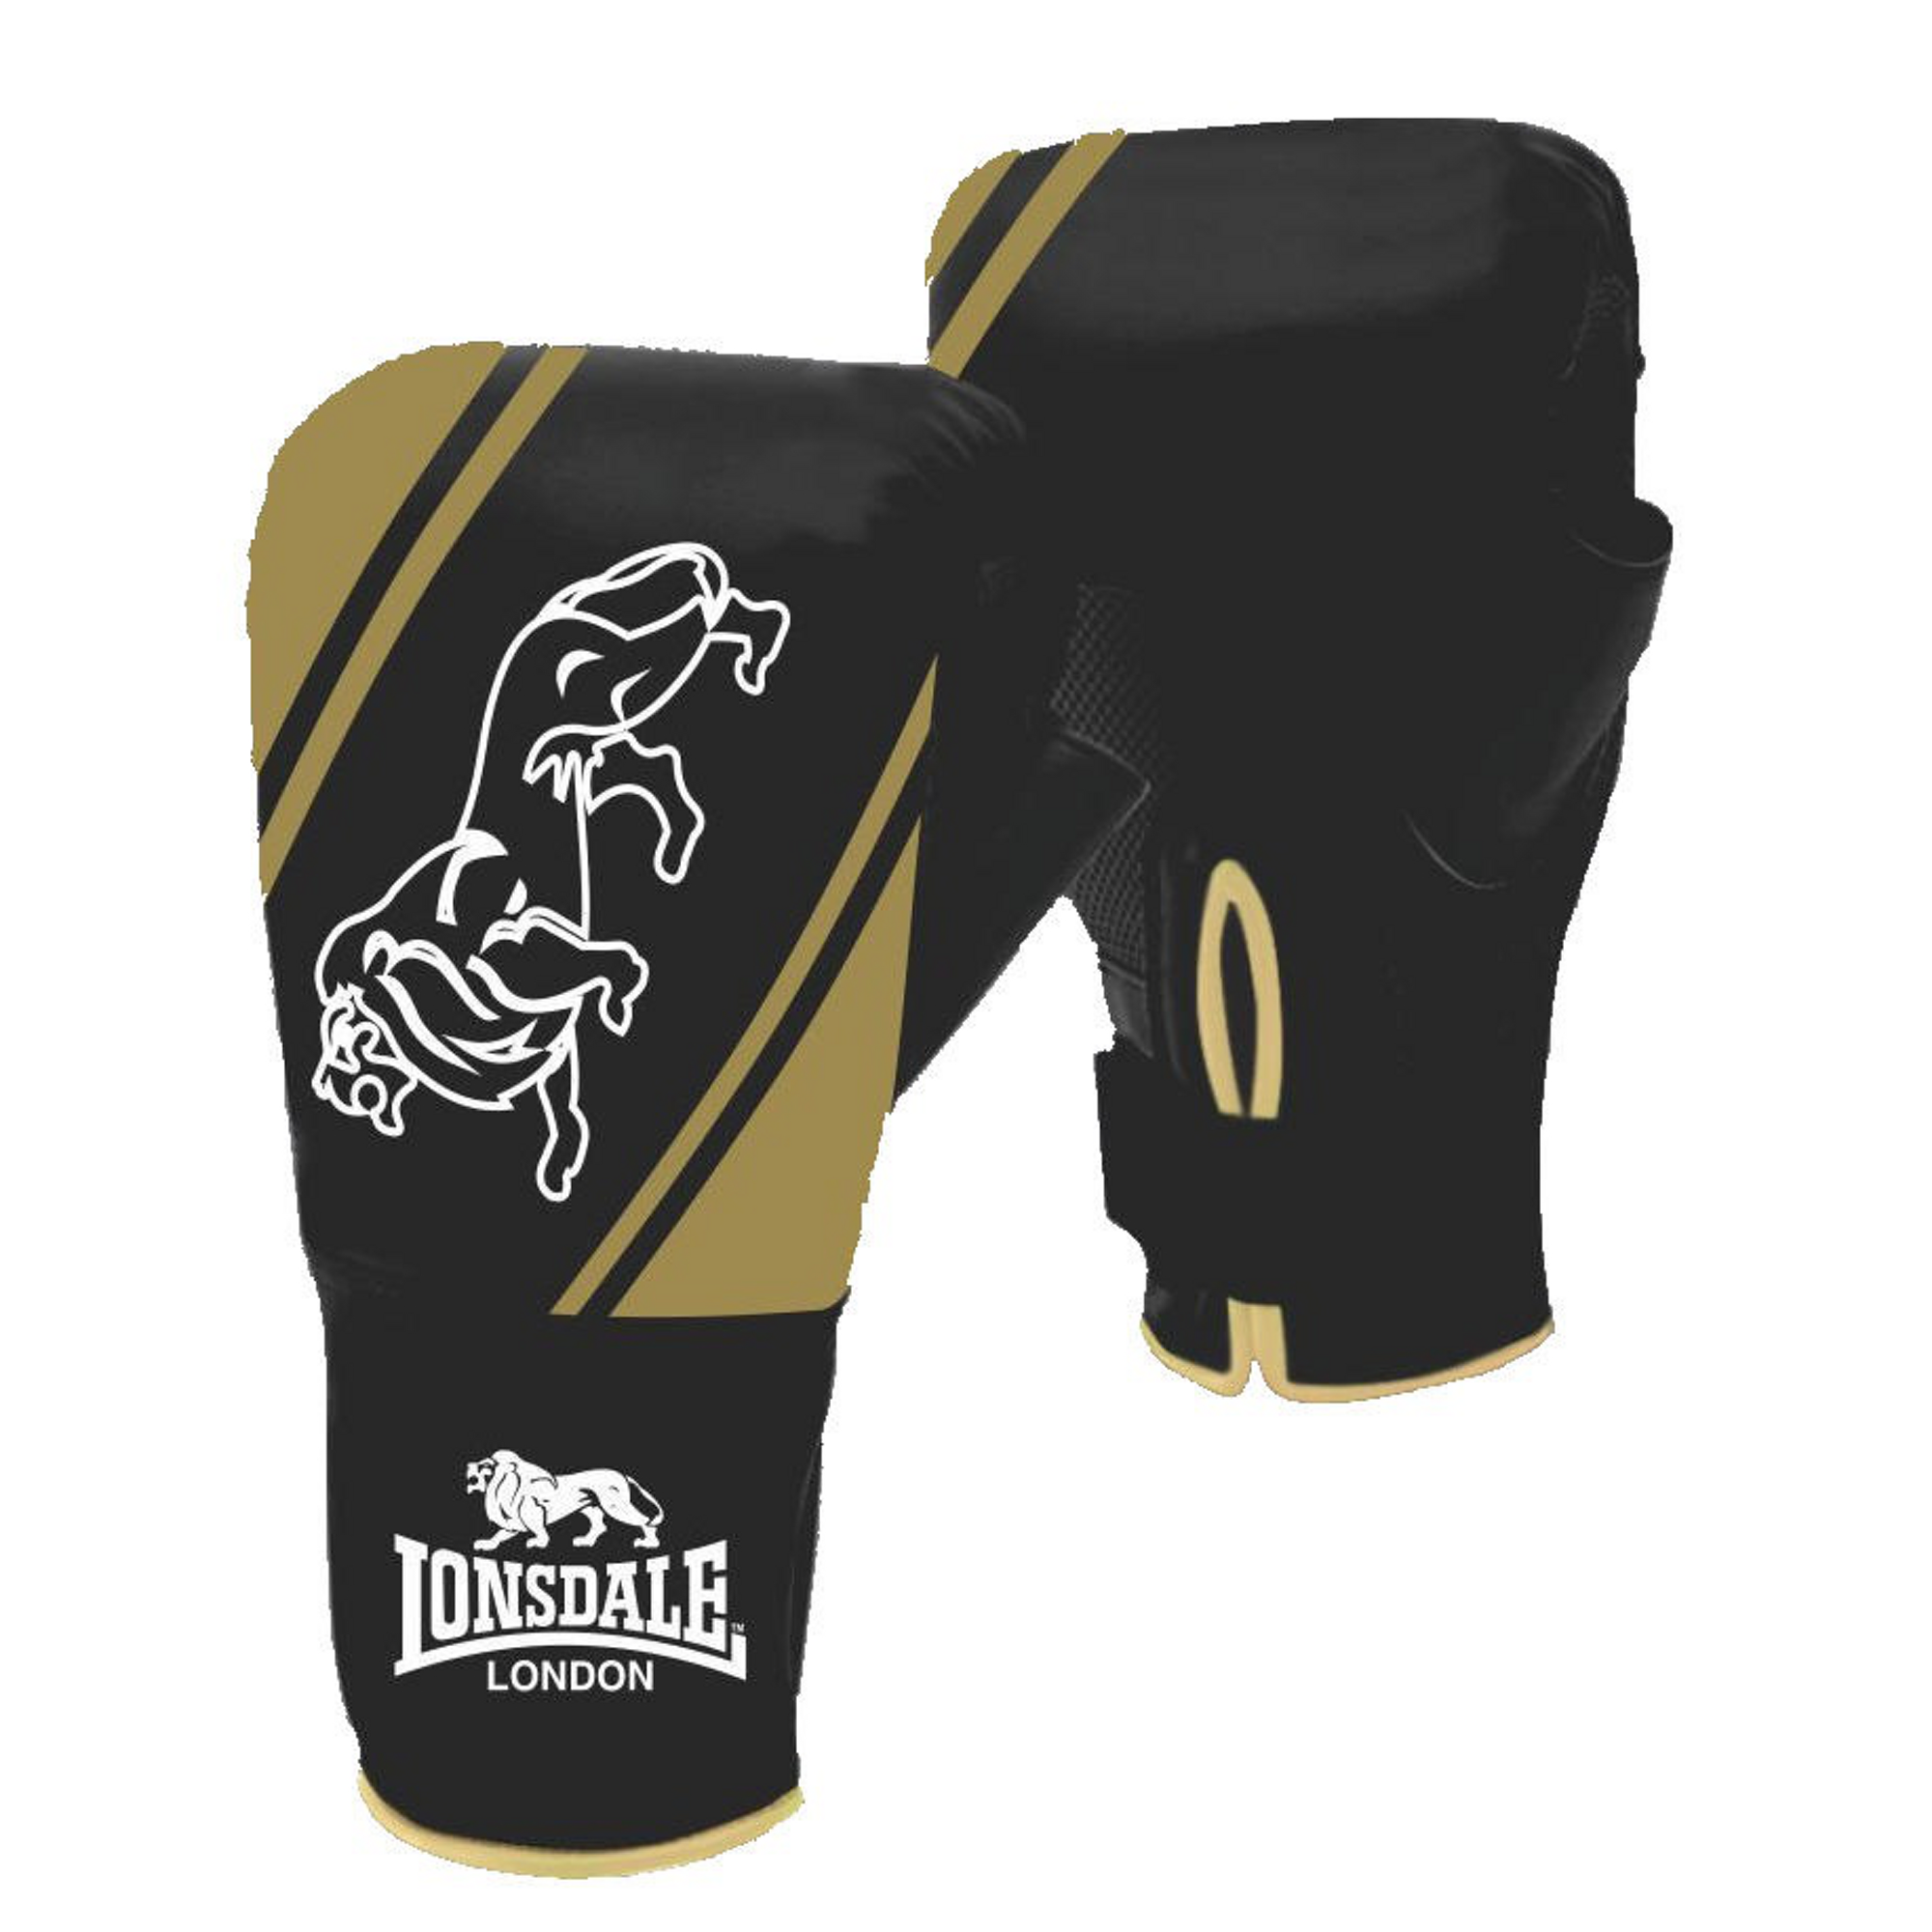 New Black Lonsdale Boxing Gloves Jab Training Boxing Gloves 